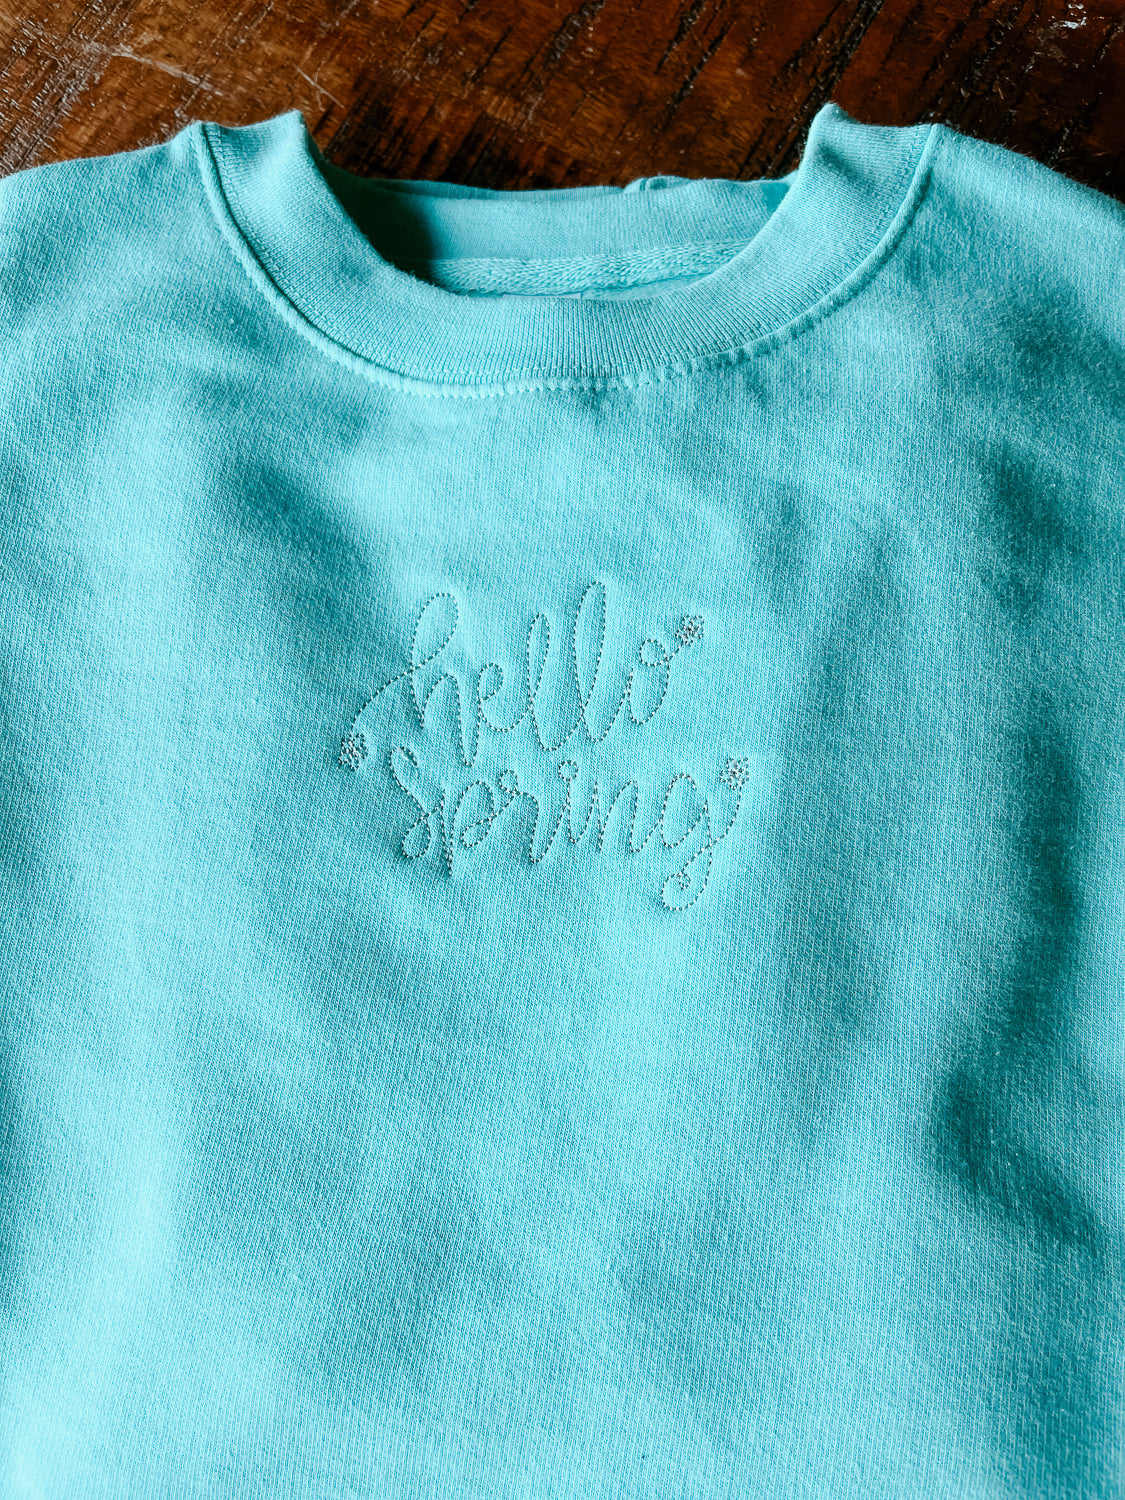 Hello Spring Floral Embroidered Crew Sweatshirt